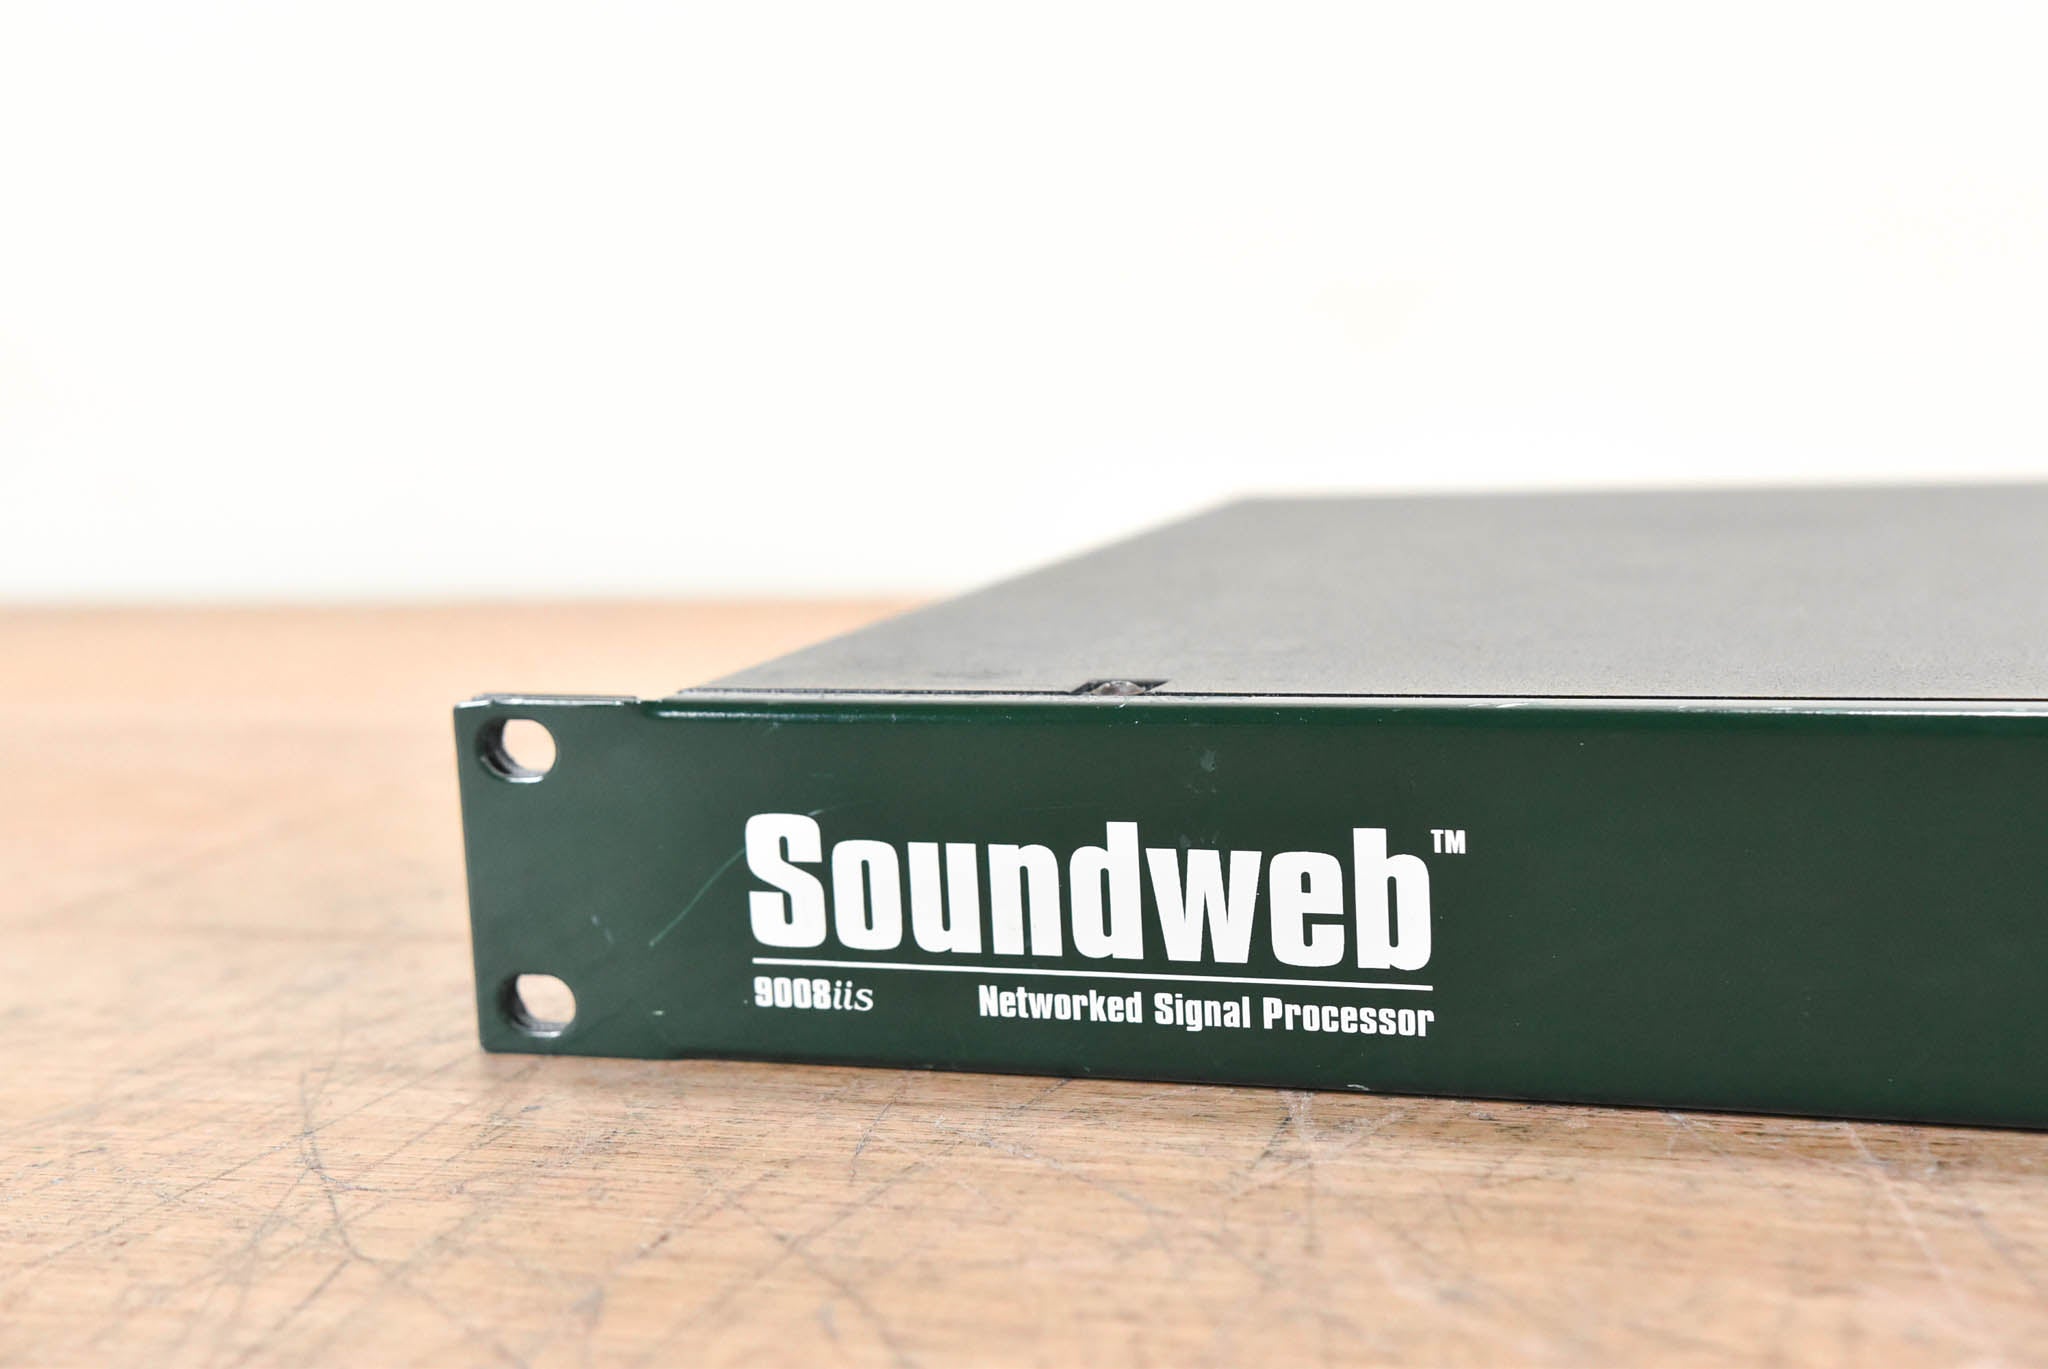 BSS Soundweb 9008iis Networked Signal Processor